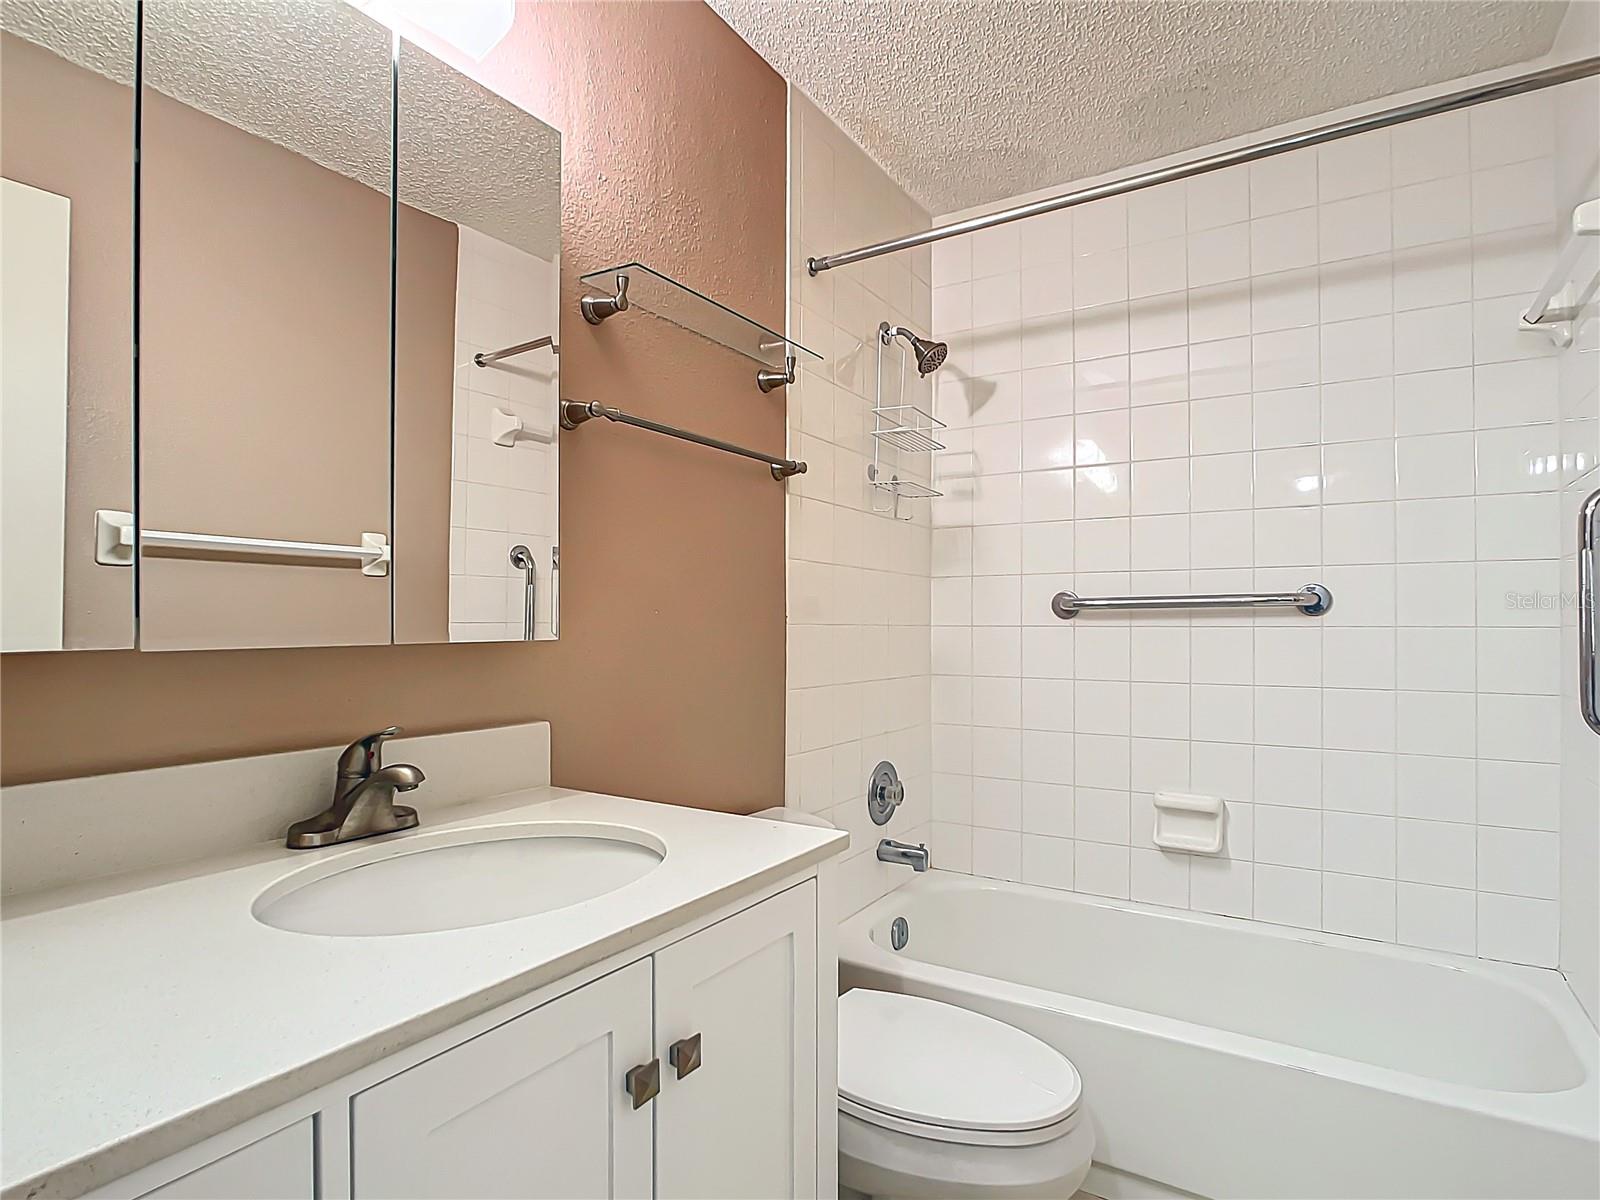 Hall bathroom has tub bath/ shower